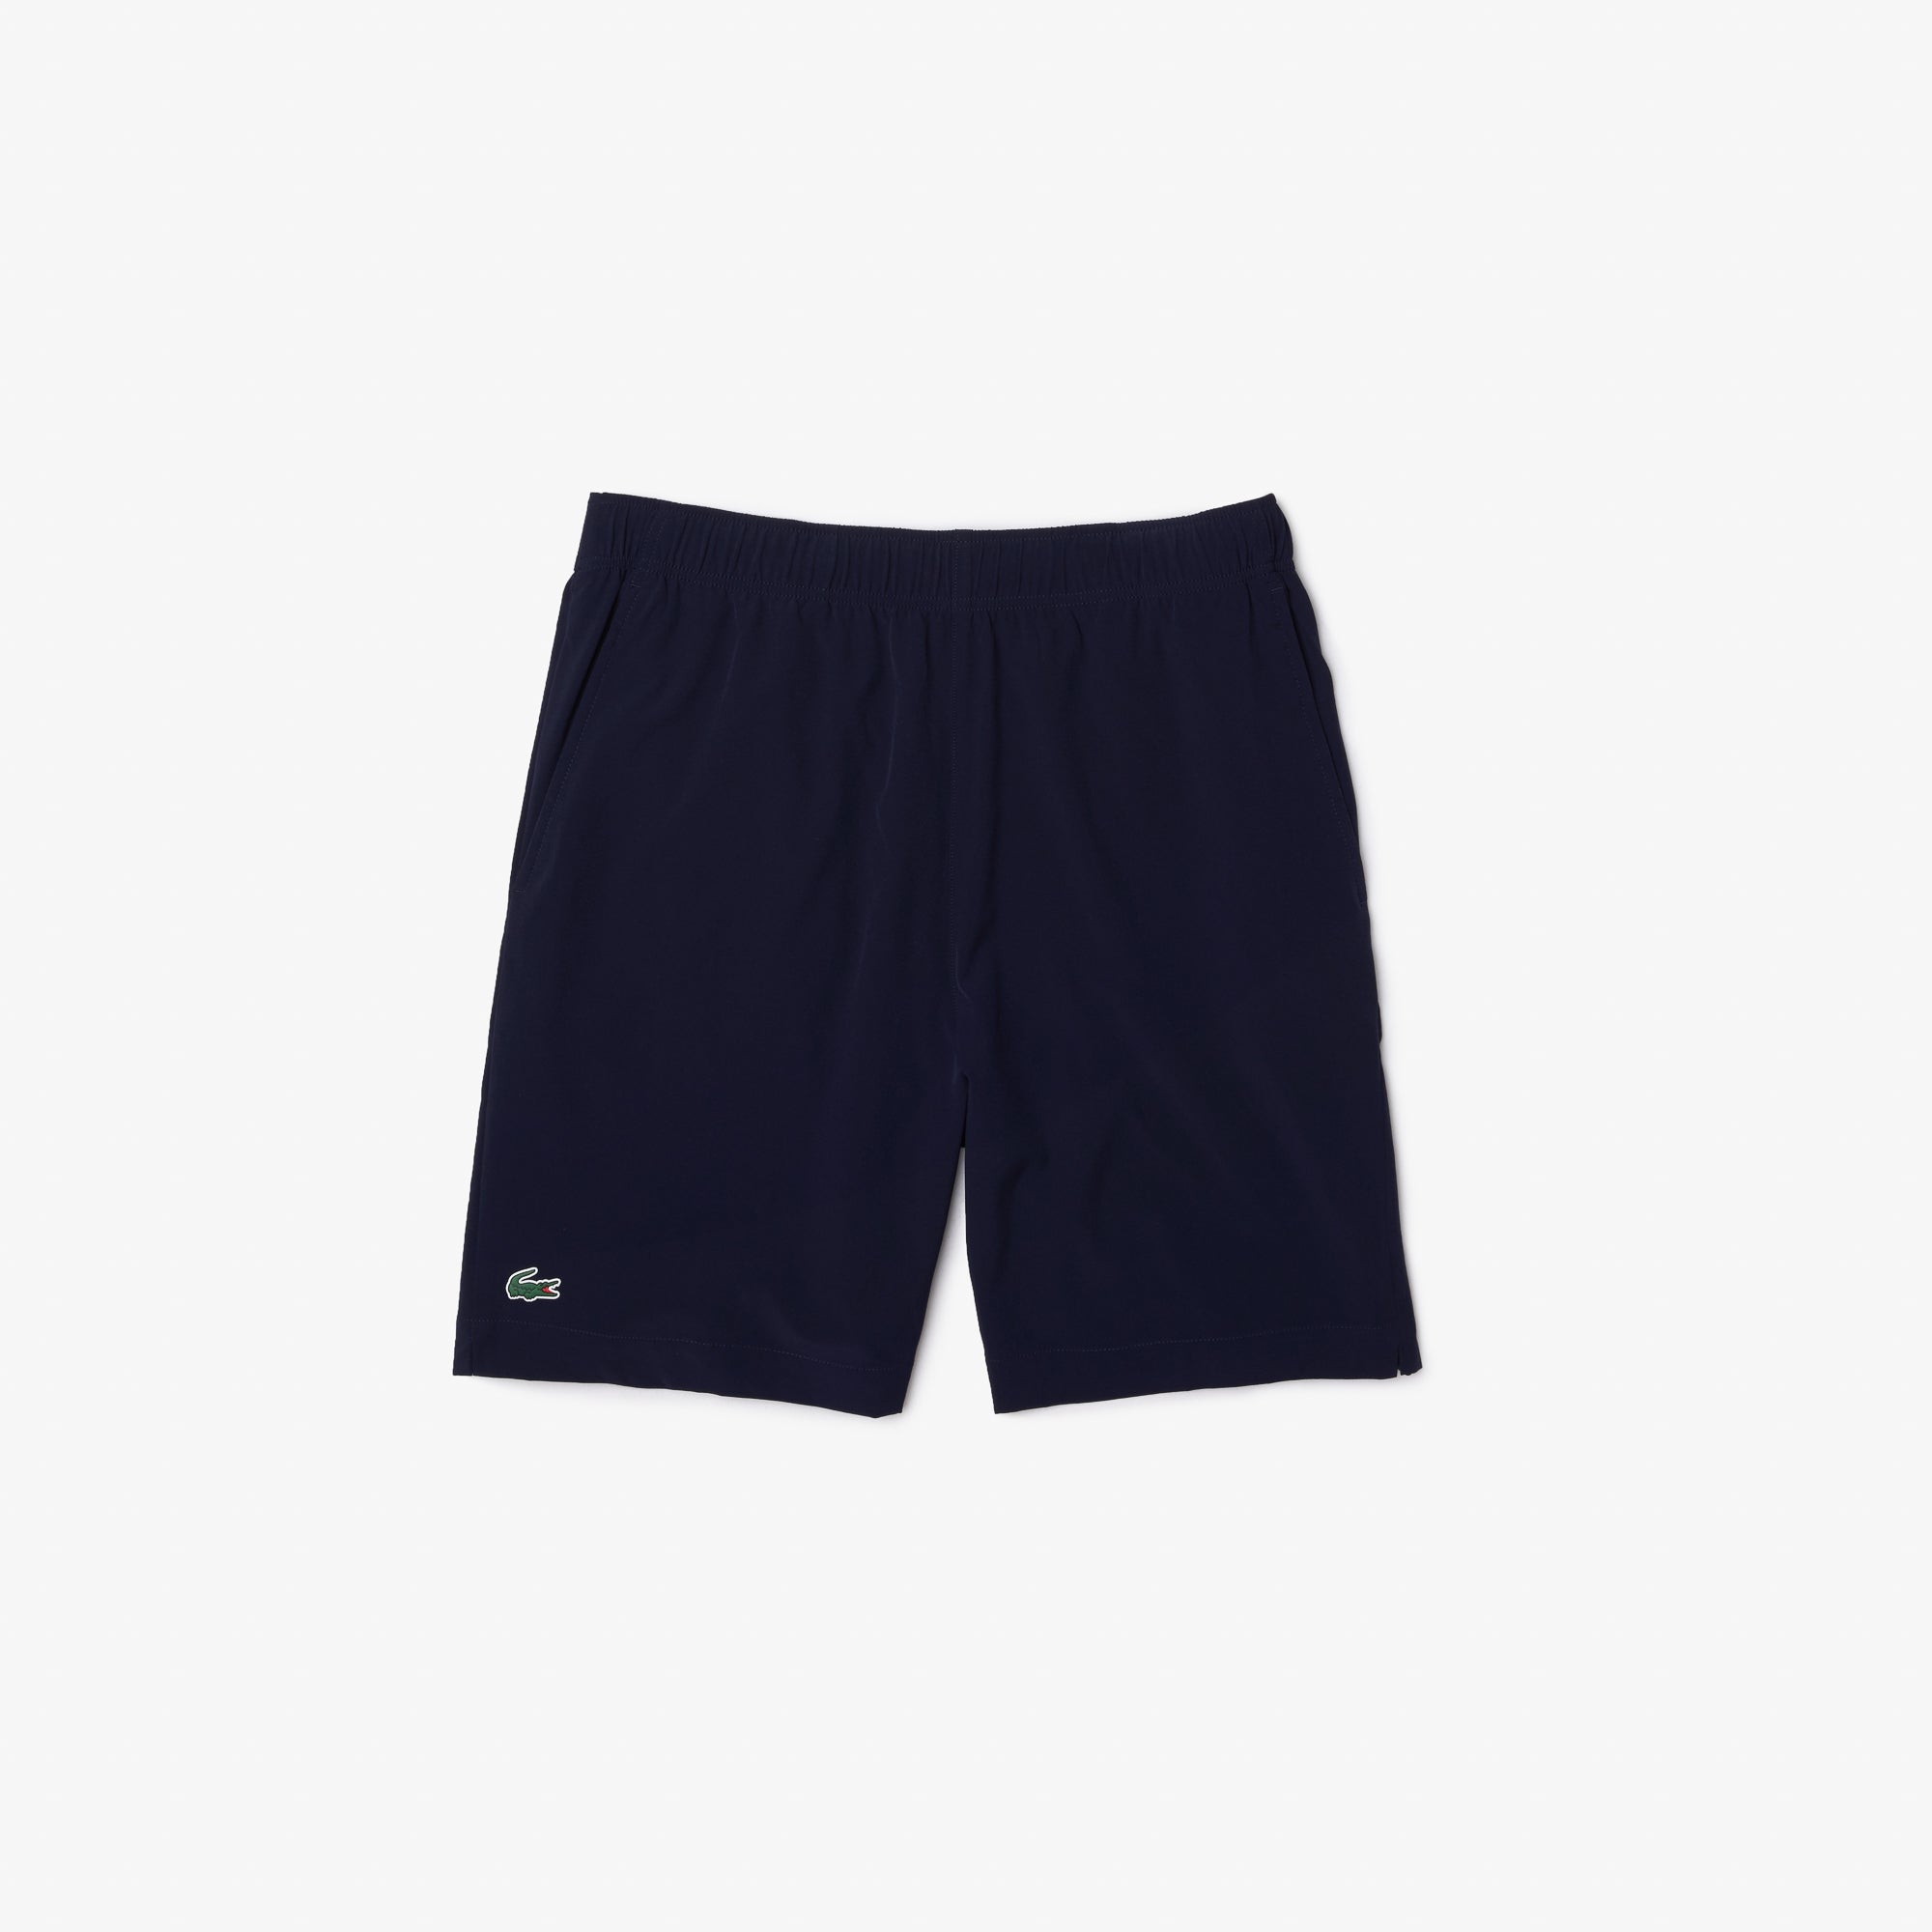 Lacoste Shorts (Navy)